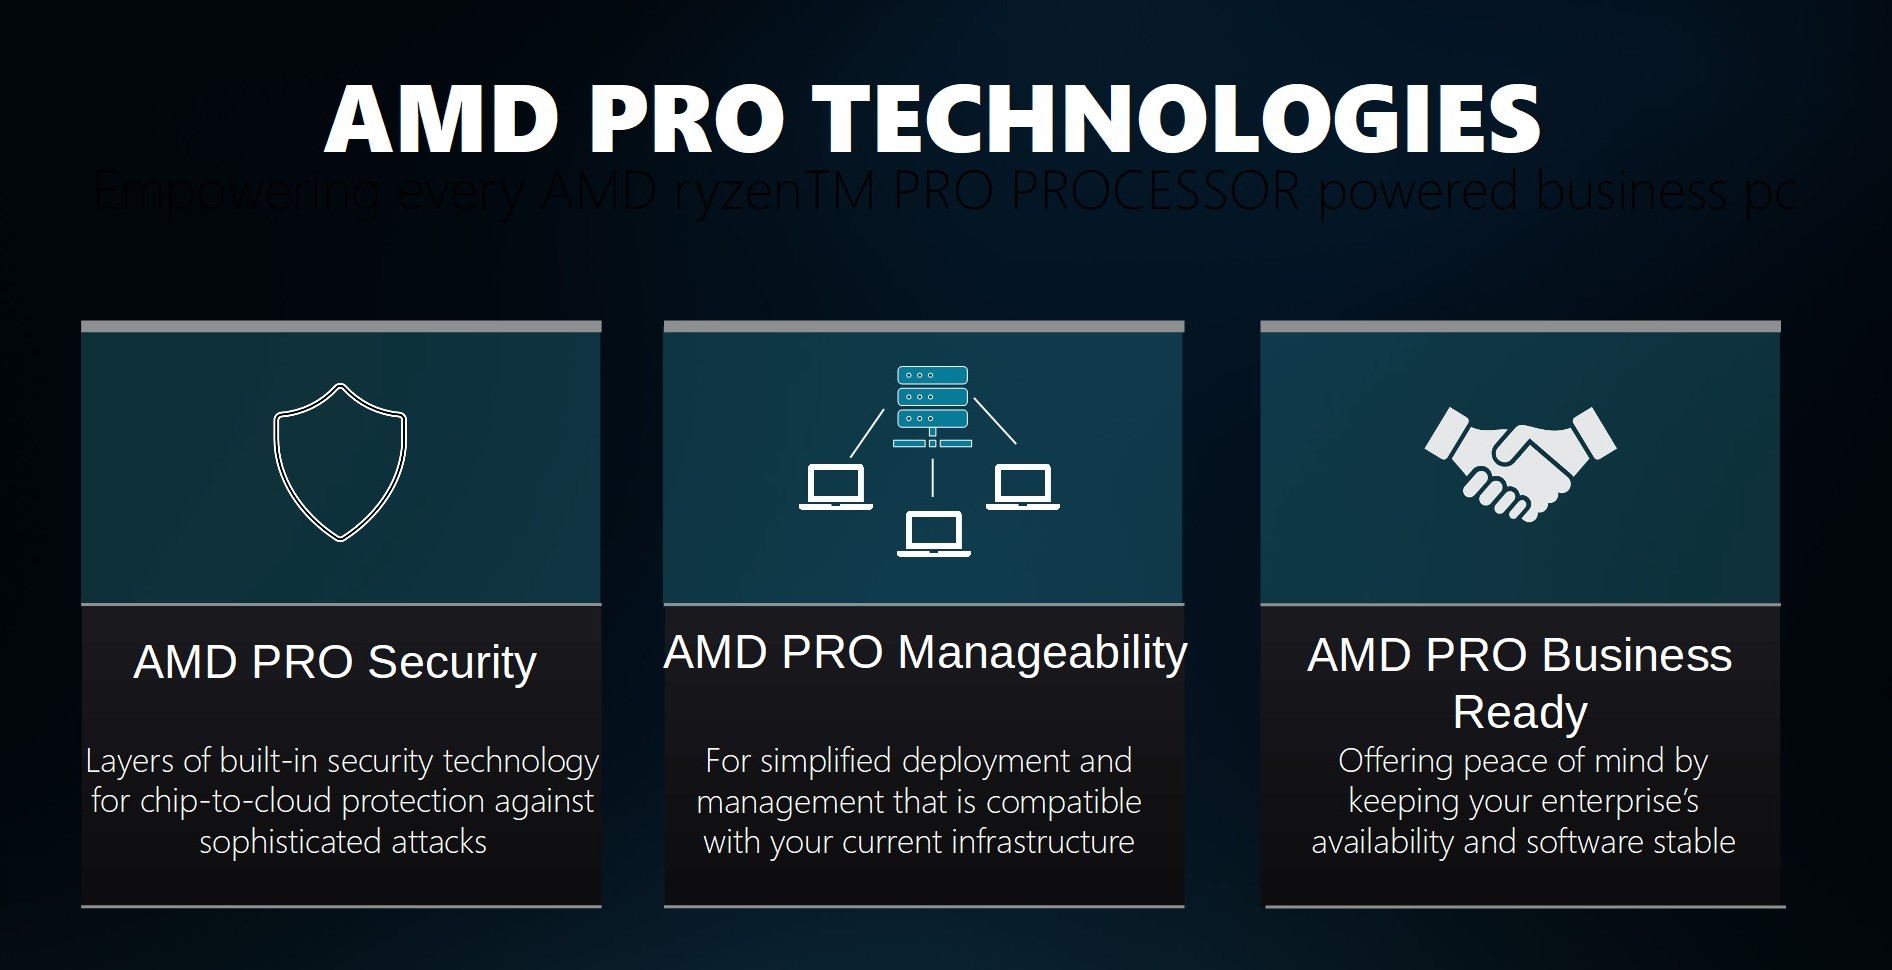 AMD Pro